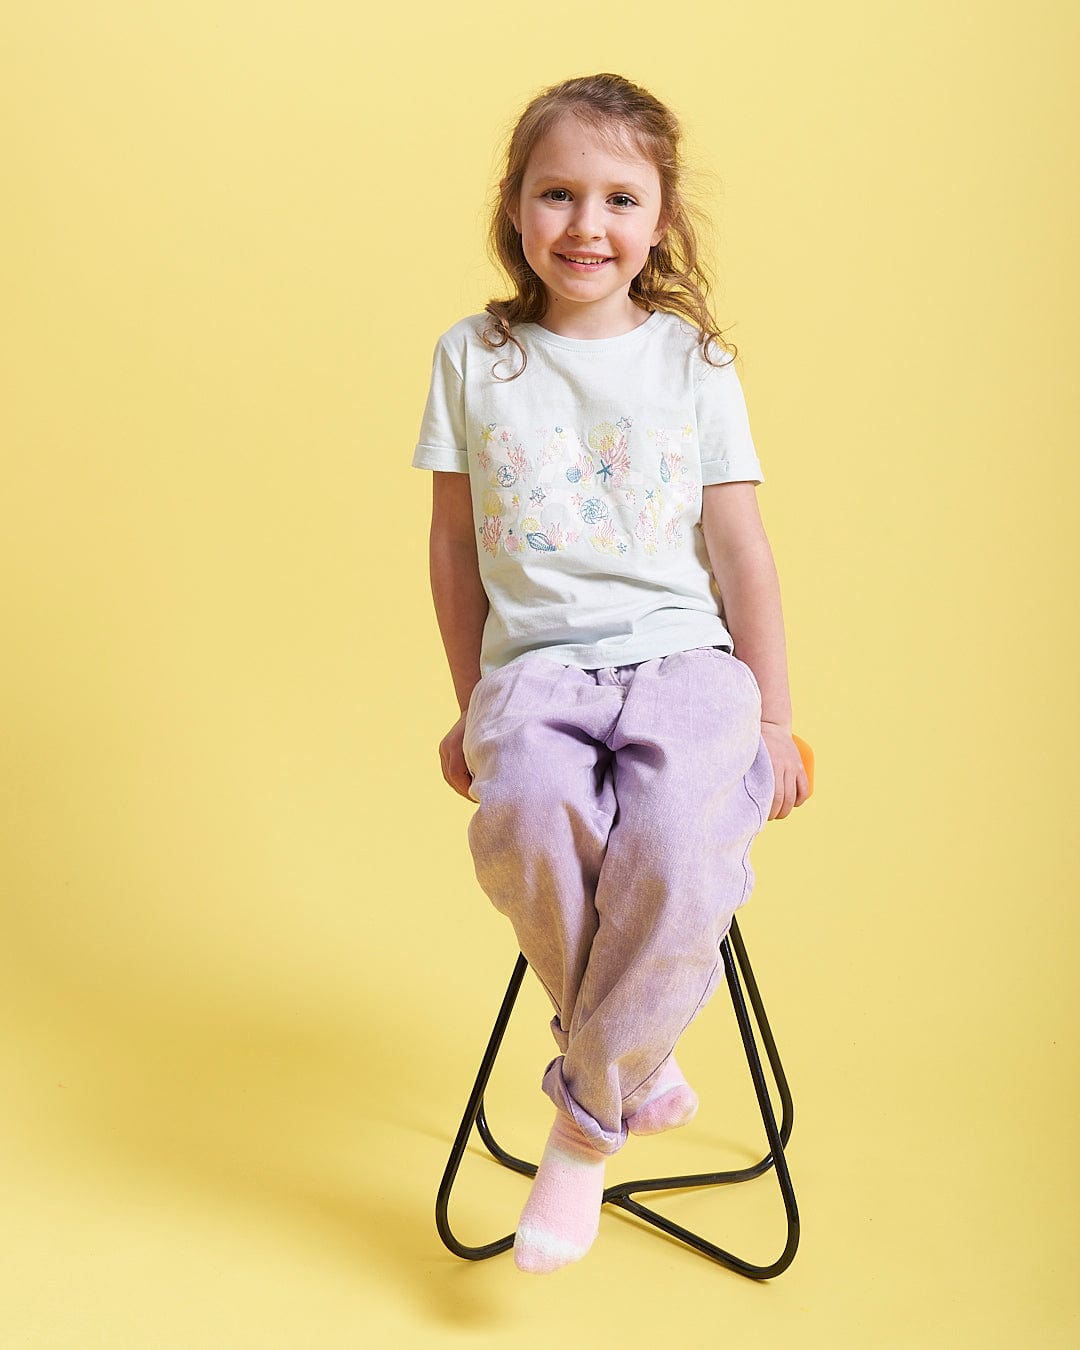 A little girl sitting on a stool wearing a Saltrock Seabed - Kids Short Sleeve T-Shirt - Light Blue.